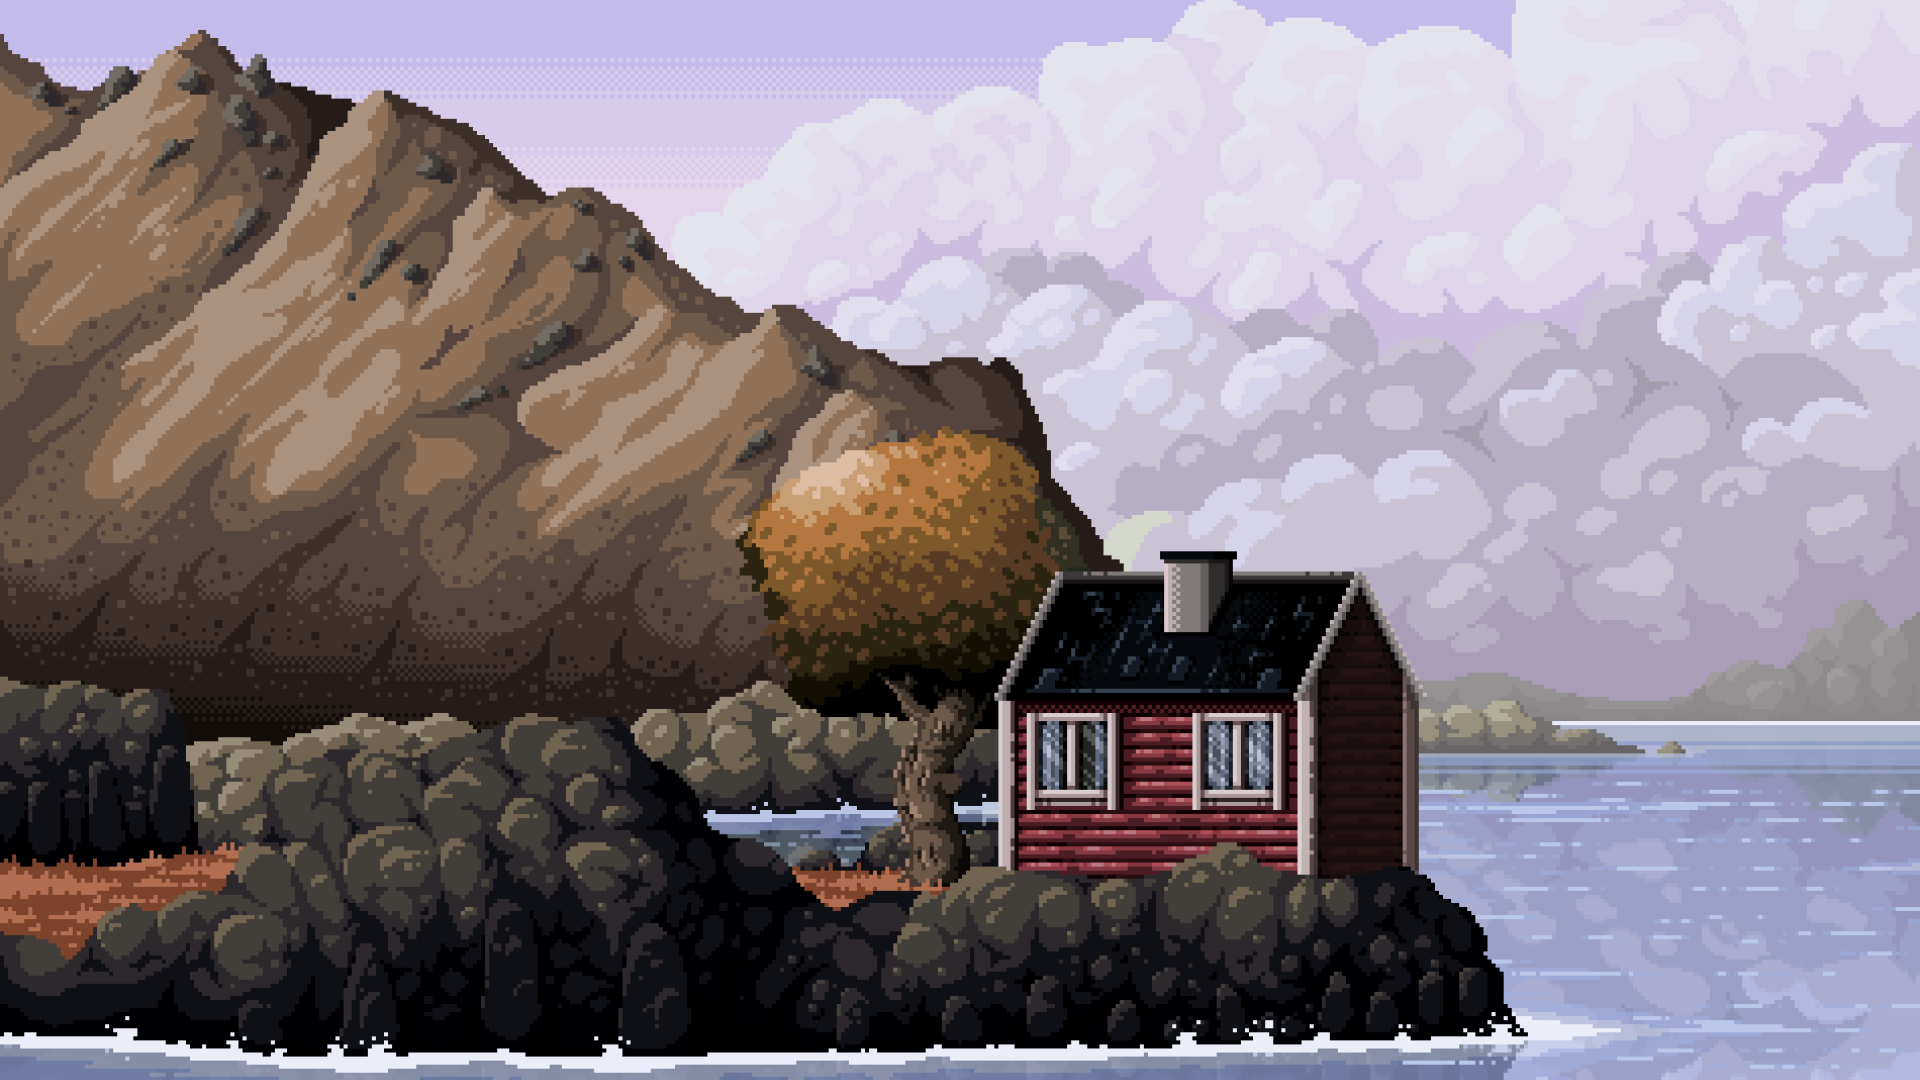 Artwork Digital Art Pixel Art Pixelated Pixels House Trees Mountains Rock Lake Clouds 1920x1080